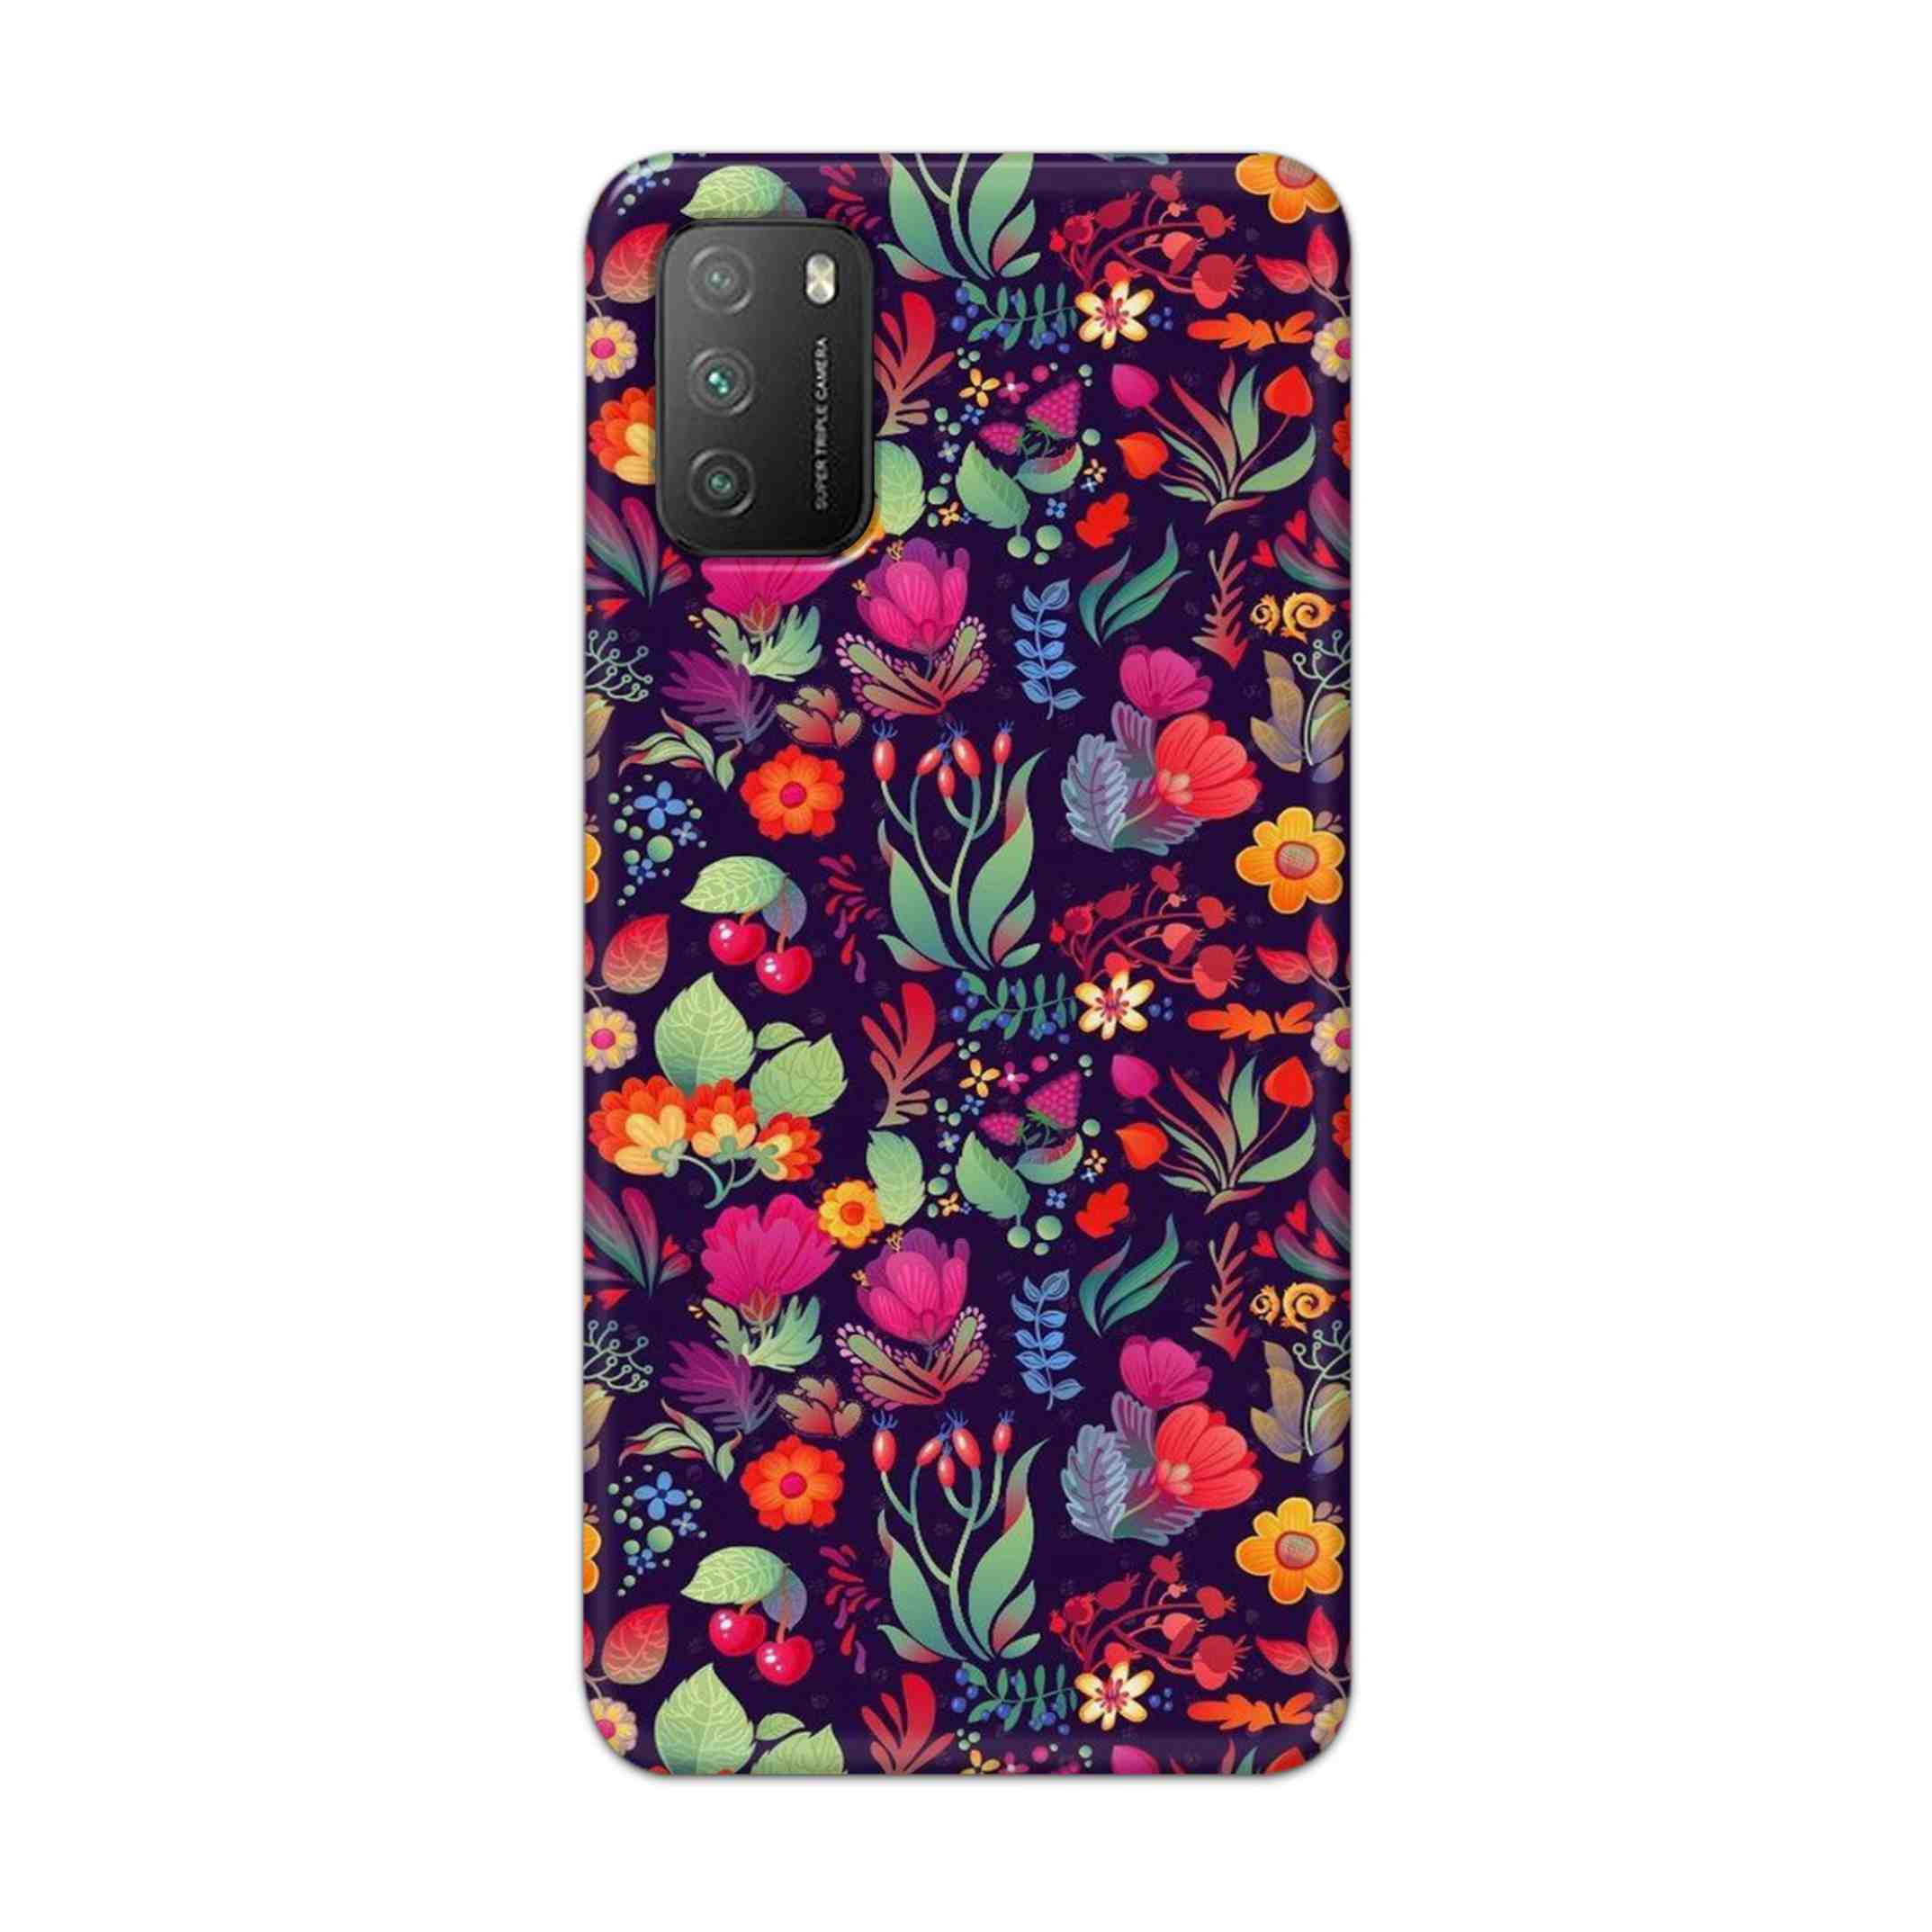 Buy Fruits Flower Hard Back Mobile Phone Case Cover For Poco M3 Online